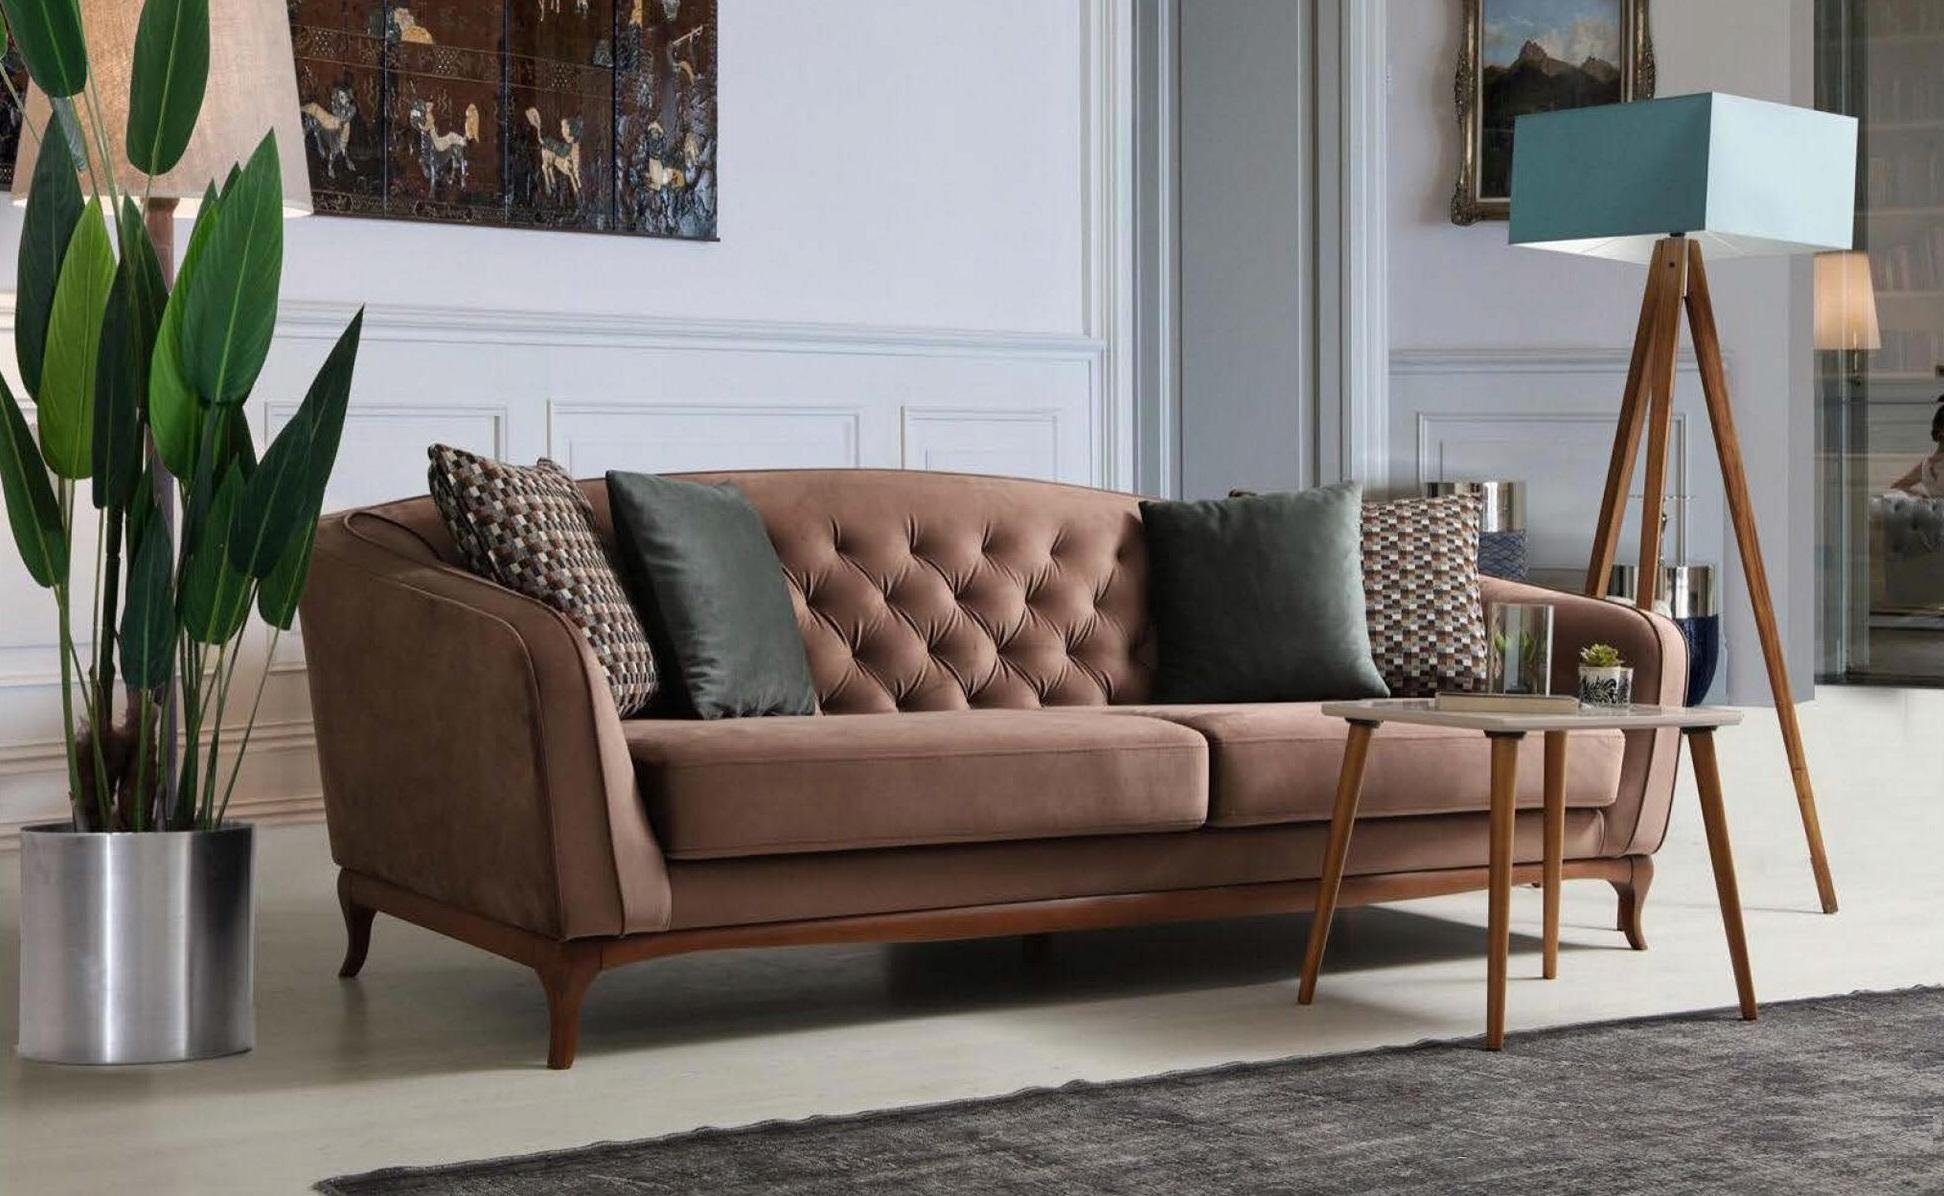 JVmoebel Sofa Braun-grüne Made Chesterfield Luxus Sofagarnitur 4+3+1, Garnitur Sofas Europe in Sofa